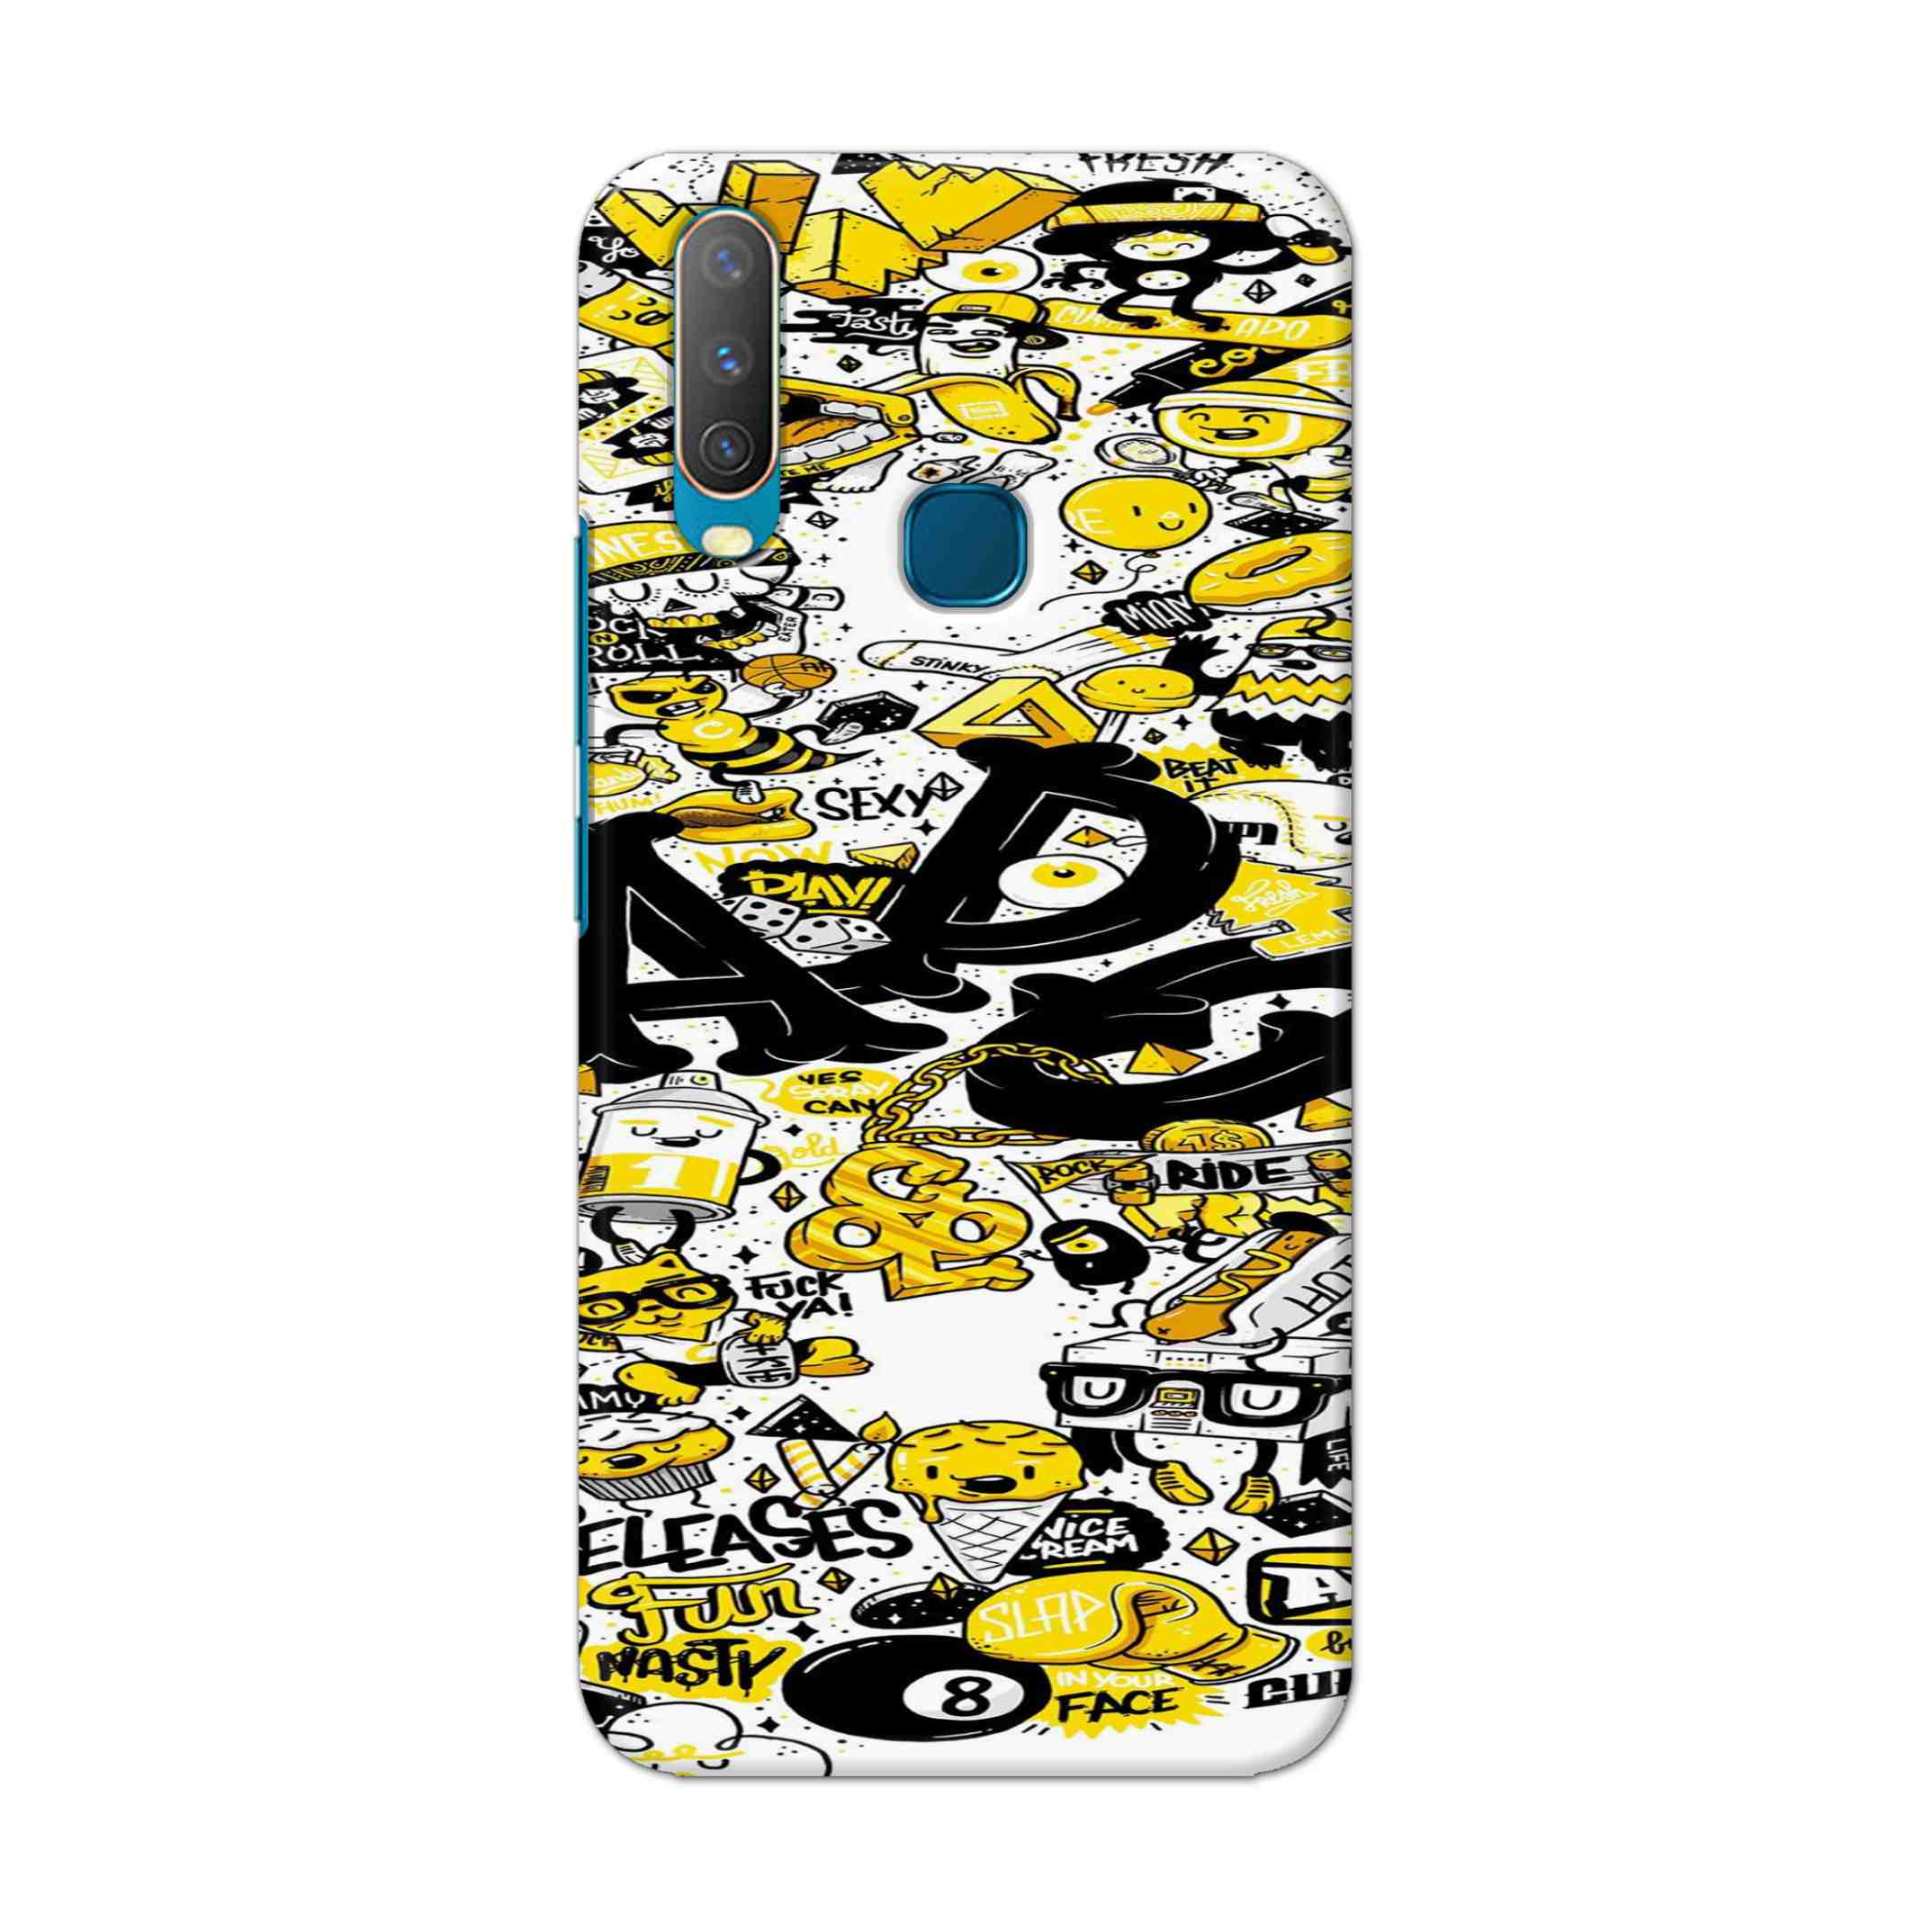 Buy Ado Hard Back Mobile Phone Case Cover For Vivo Y17 / U10 Online